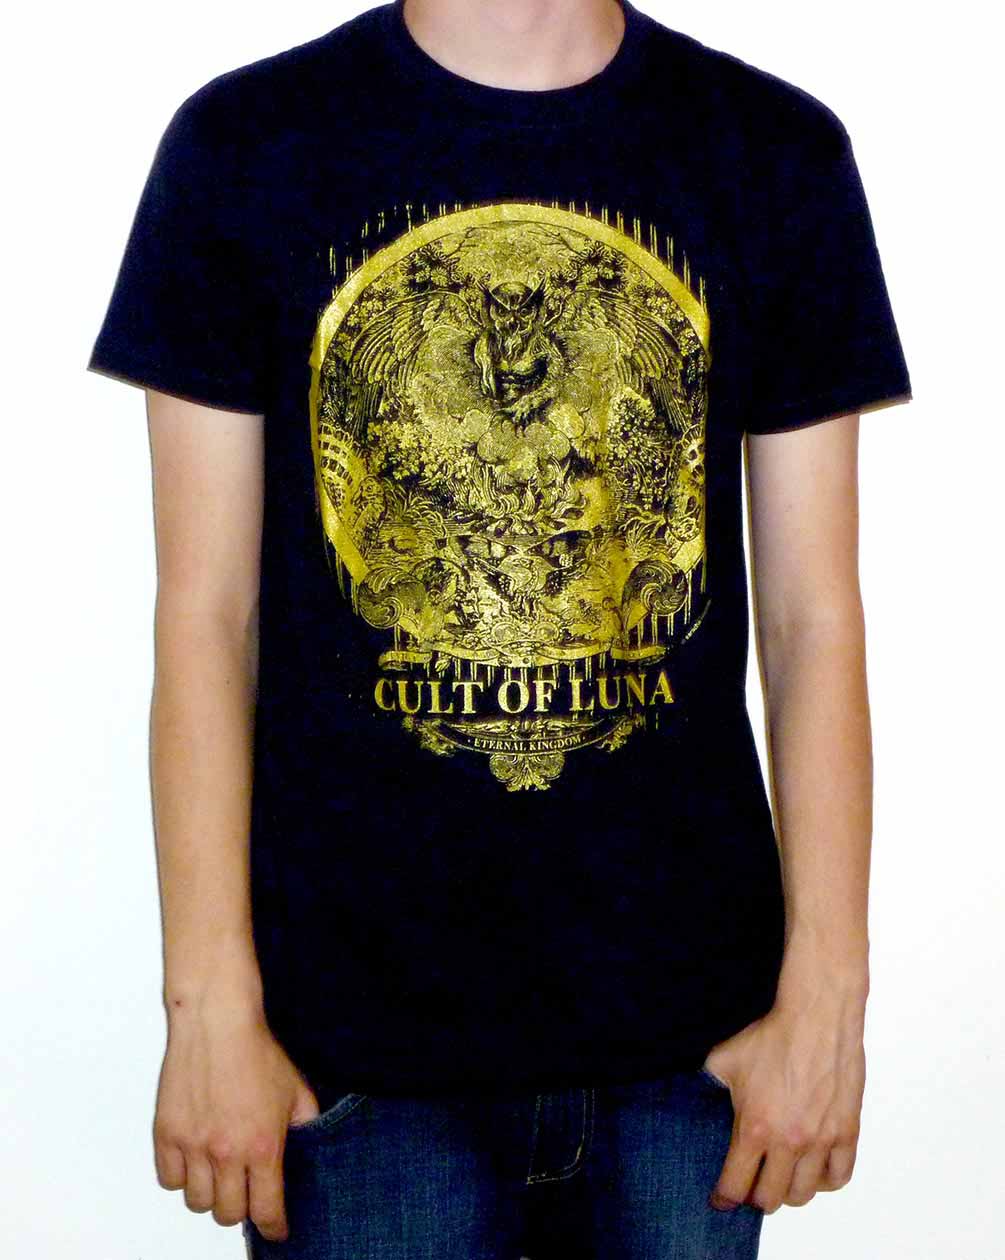 Cult Of Luna "Eternal Kingdom" Black T-shirt